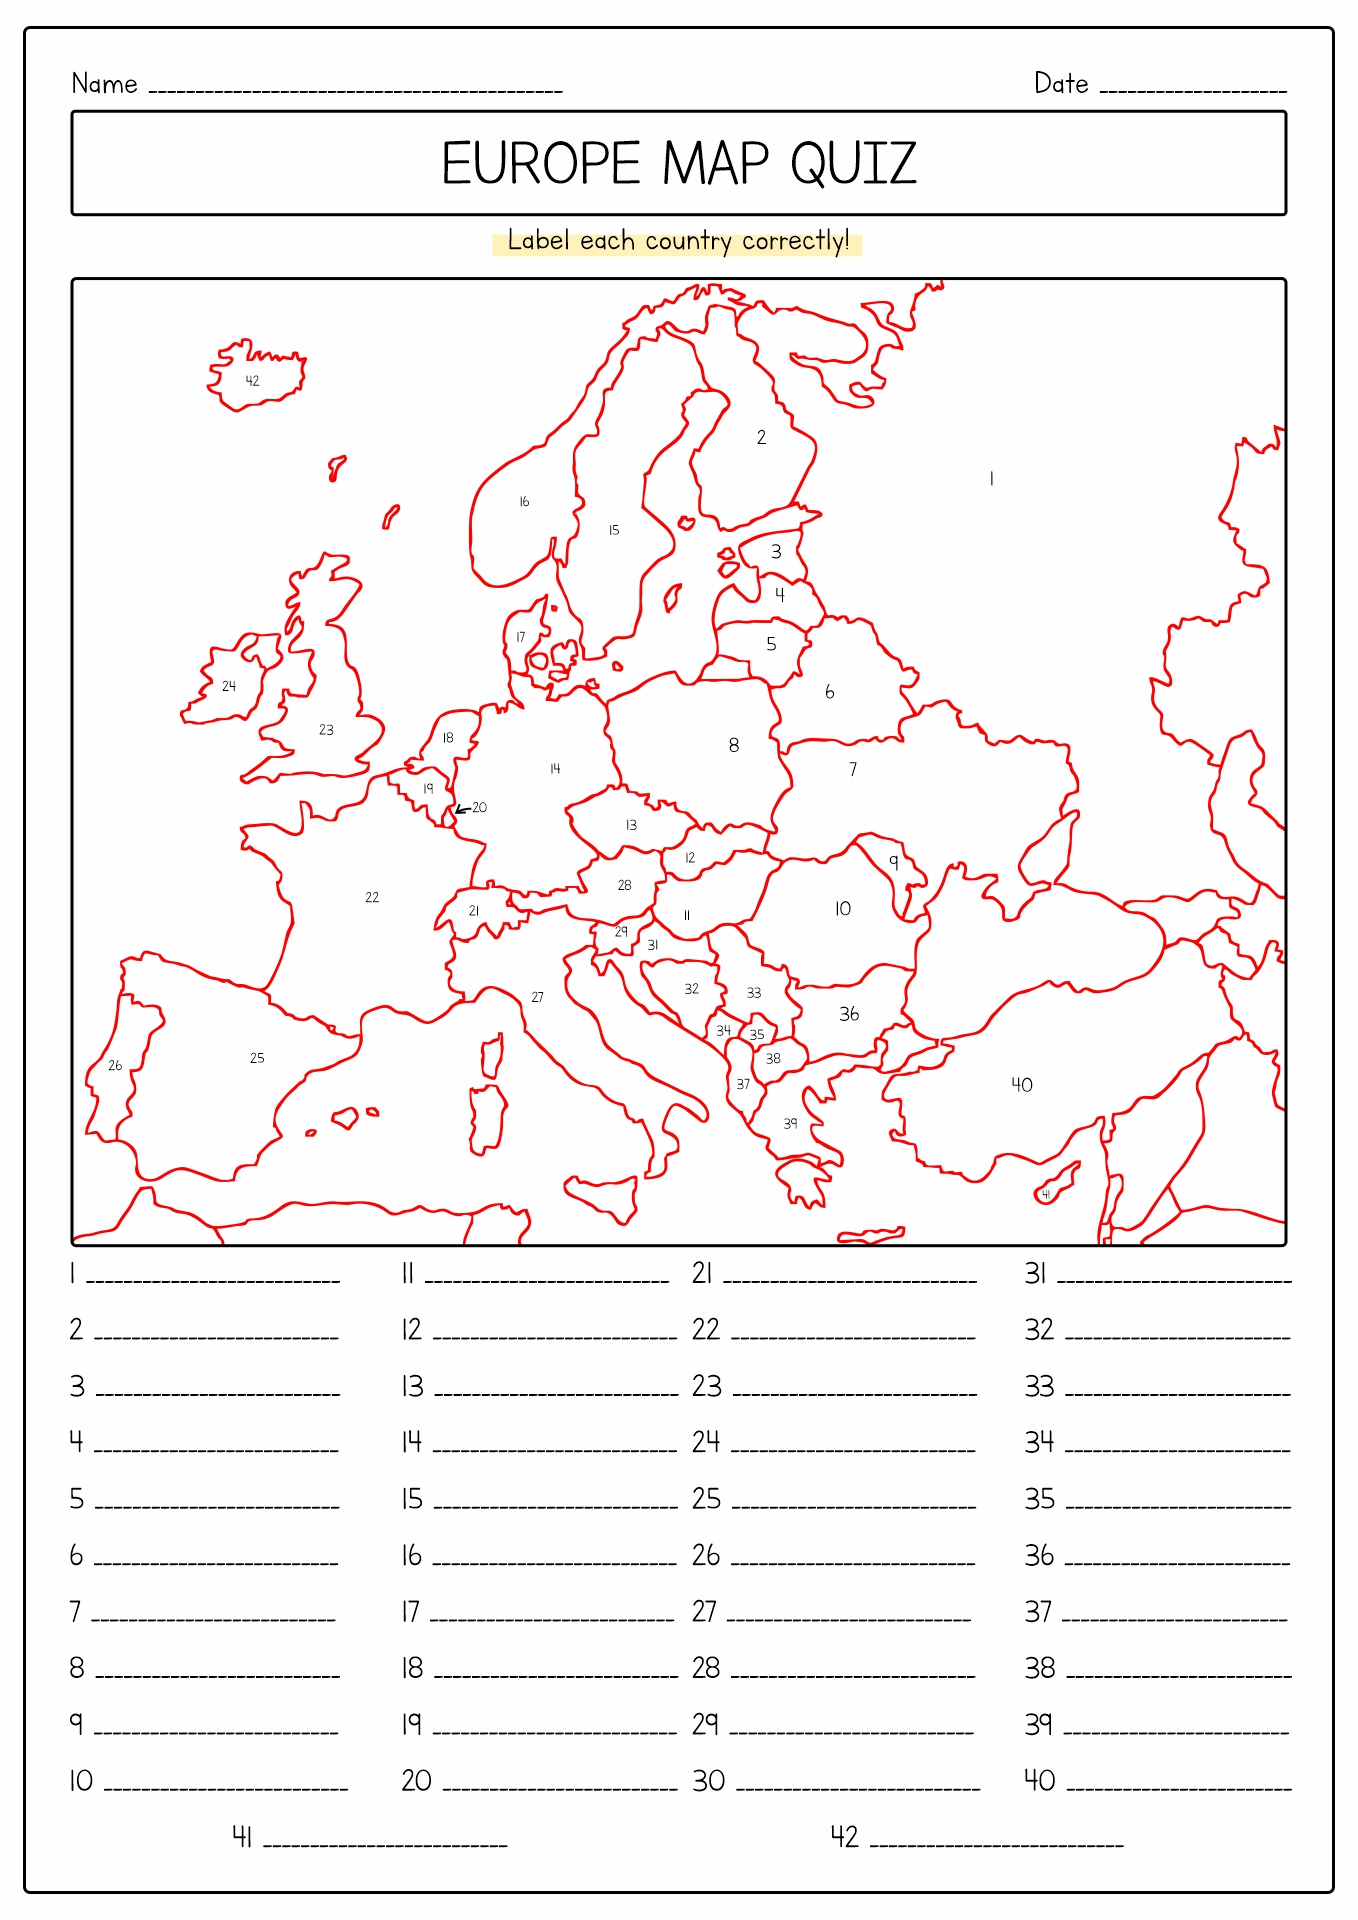 Blank Europe Map Quiz Image